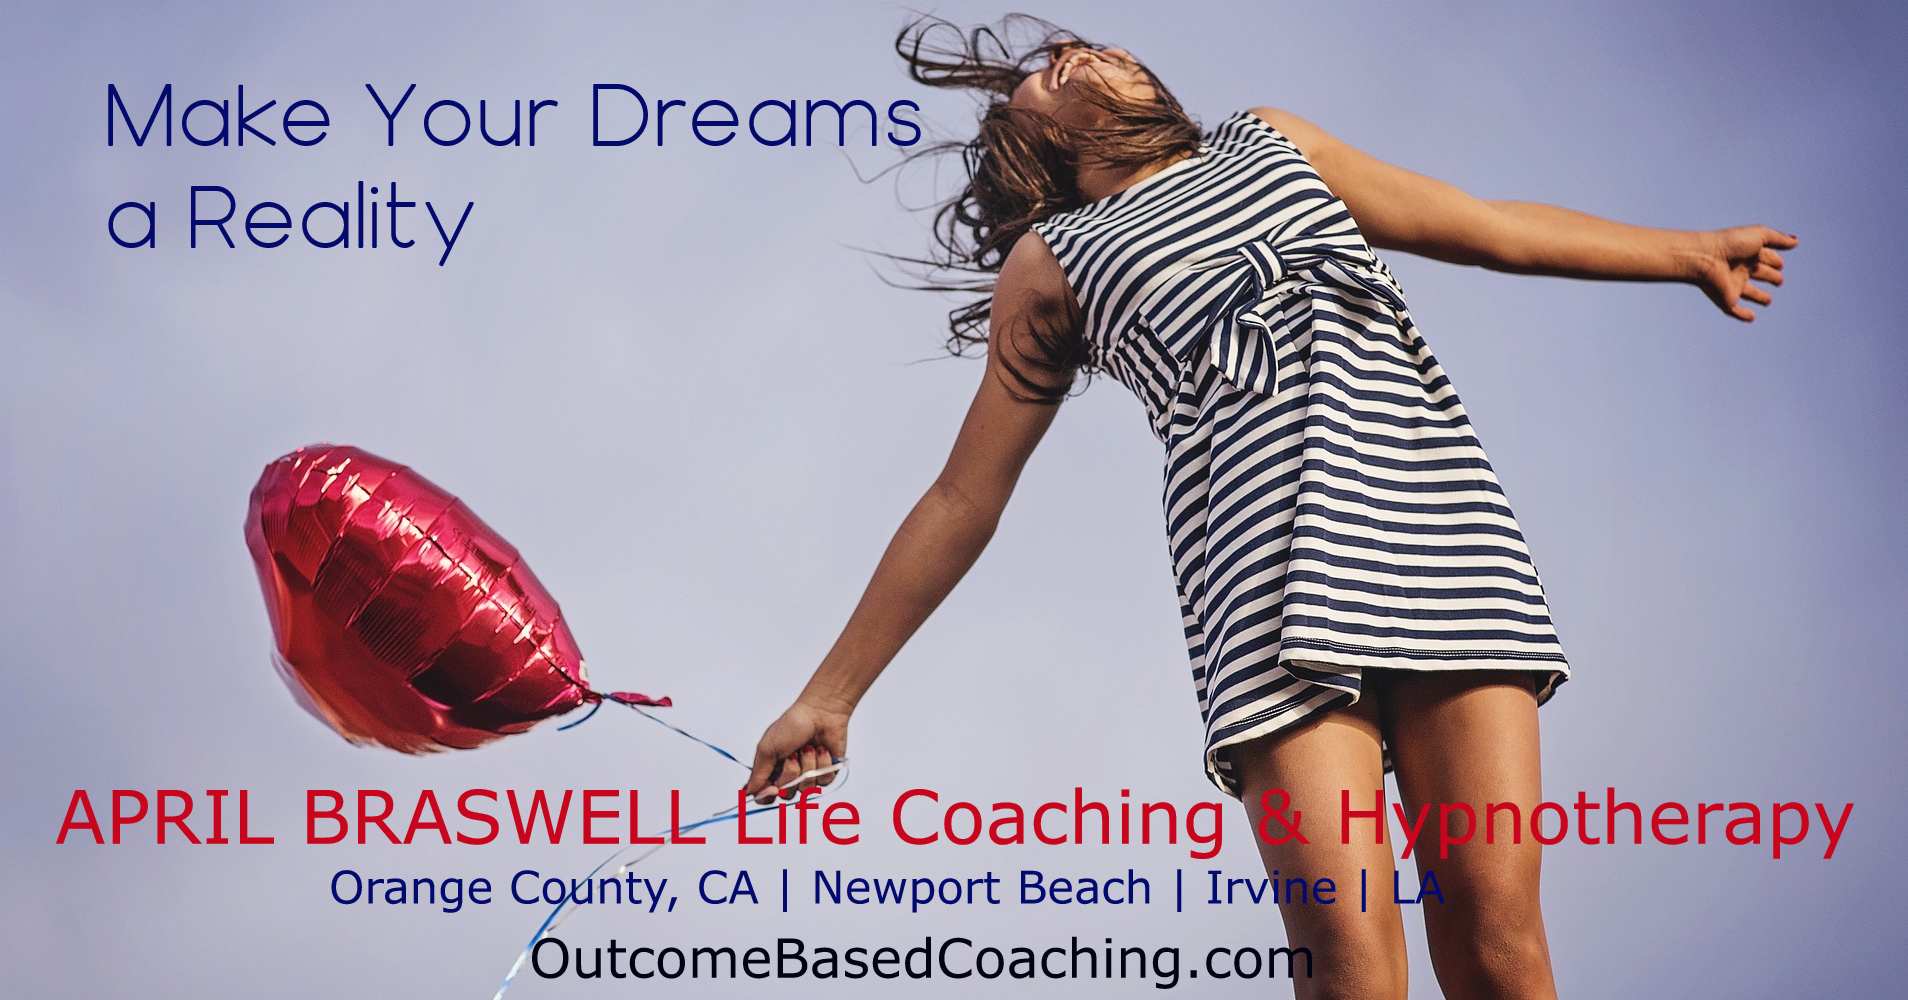 orange county ca newport beach irvine la california life coach dating coaching hypnotherapy APRIL BRASWELL